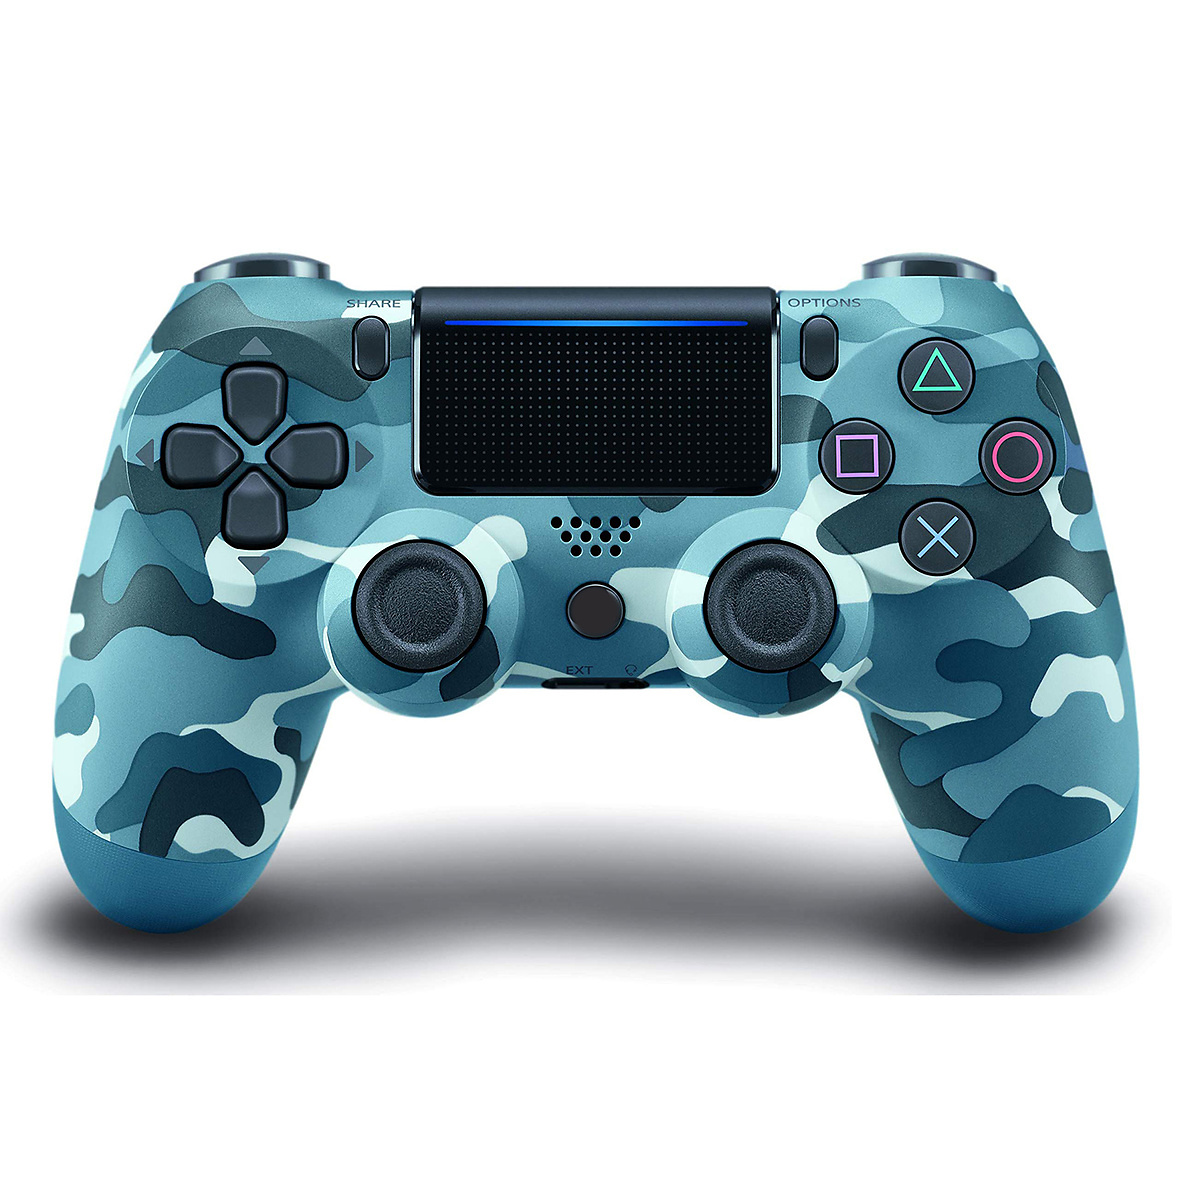 PS4 trådlös handkontroll, camo blå